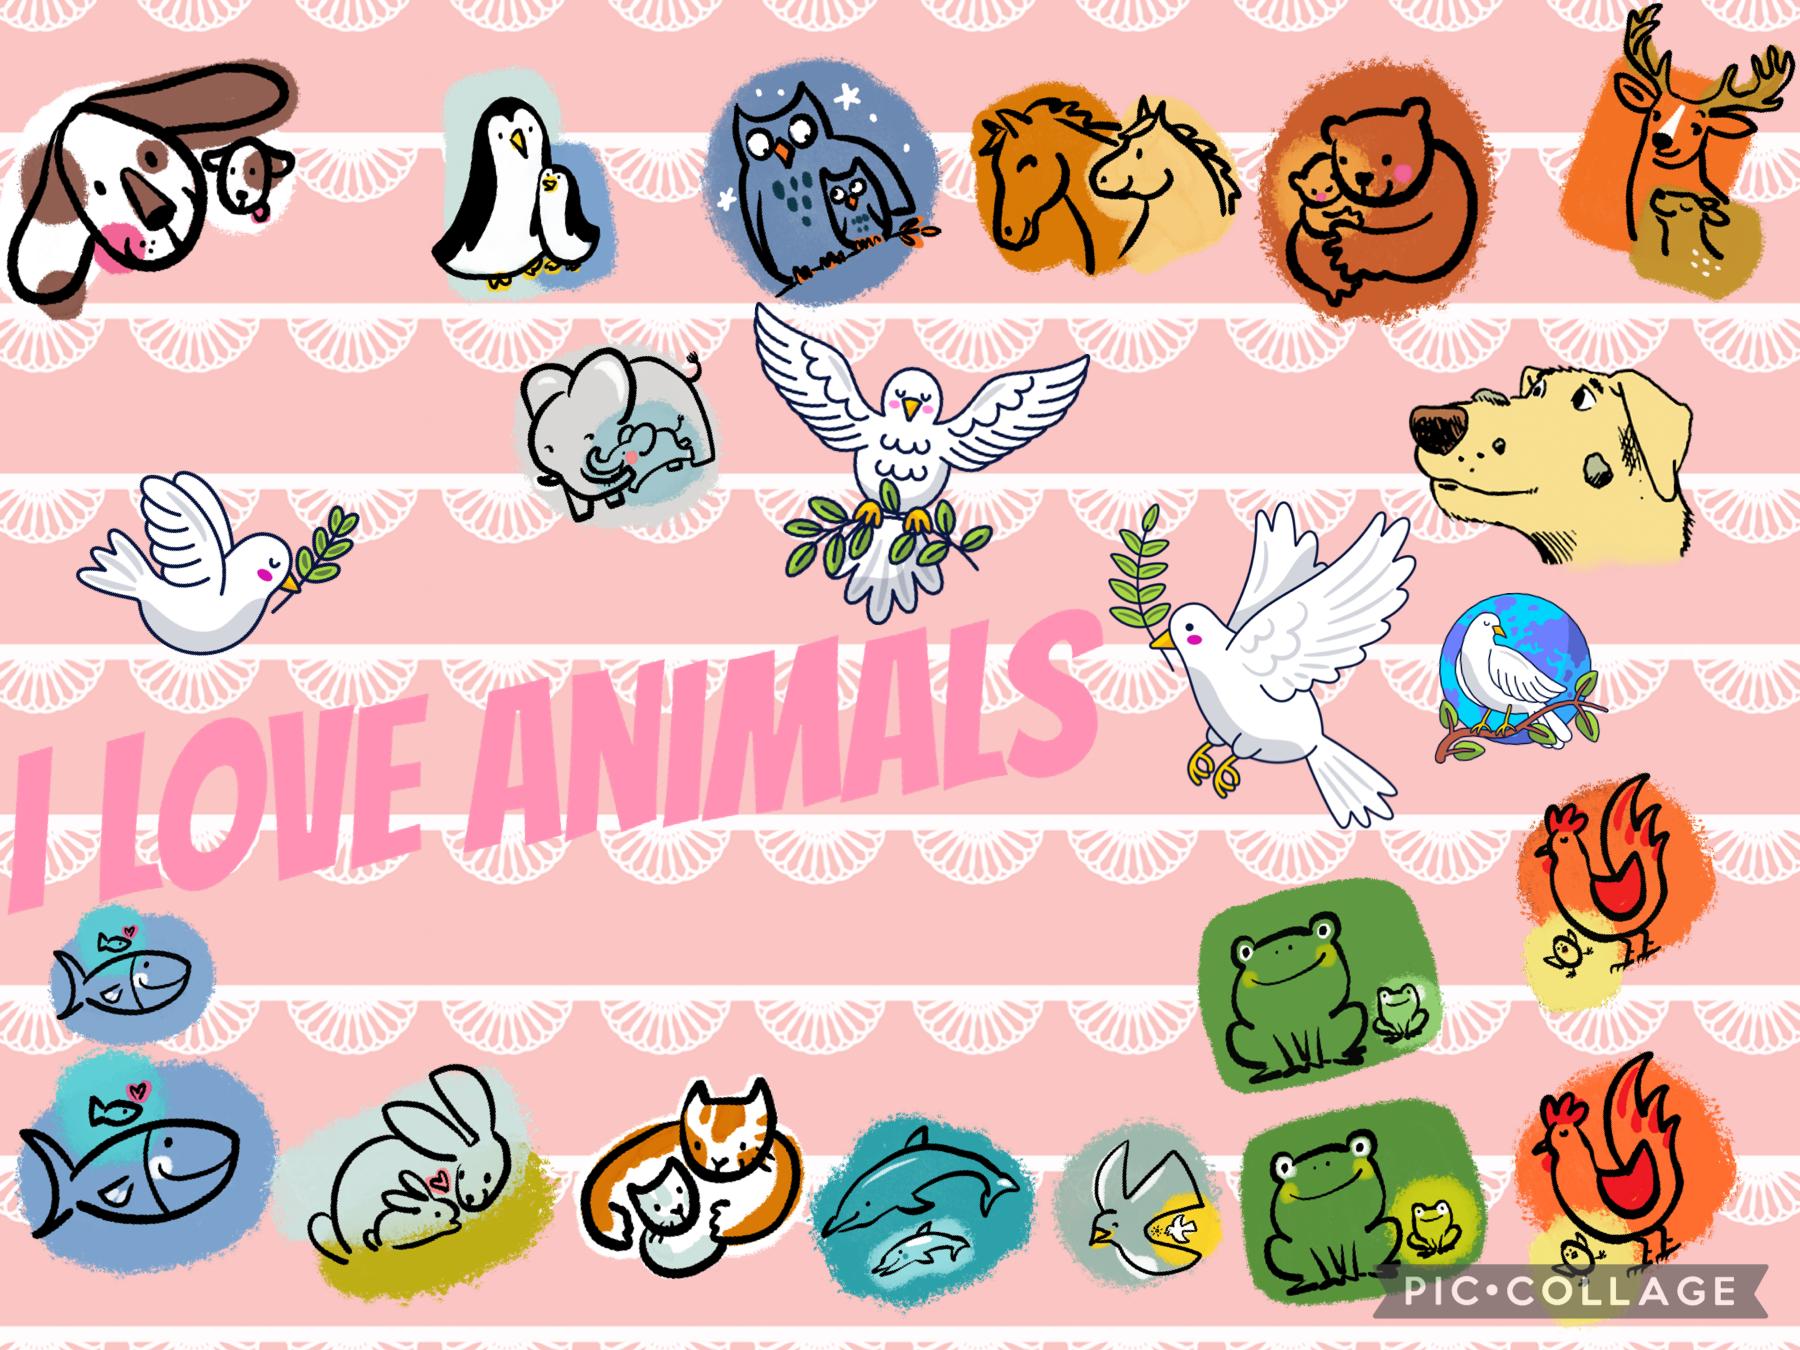 Do you love animals?